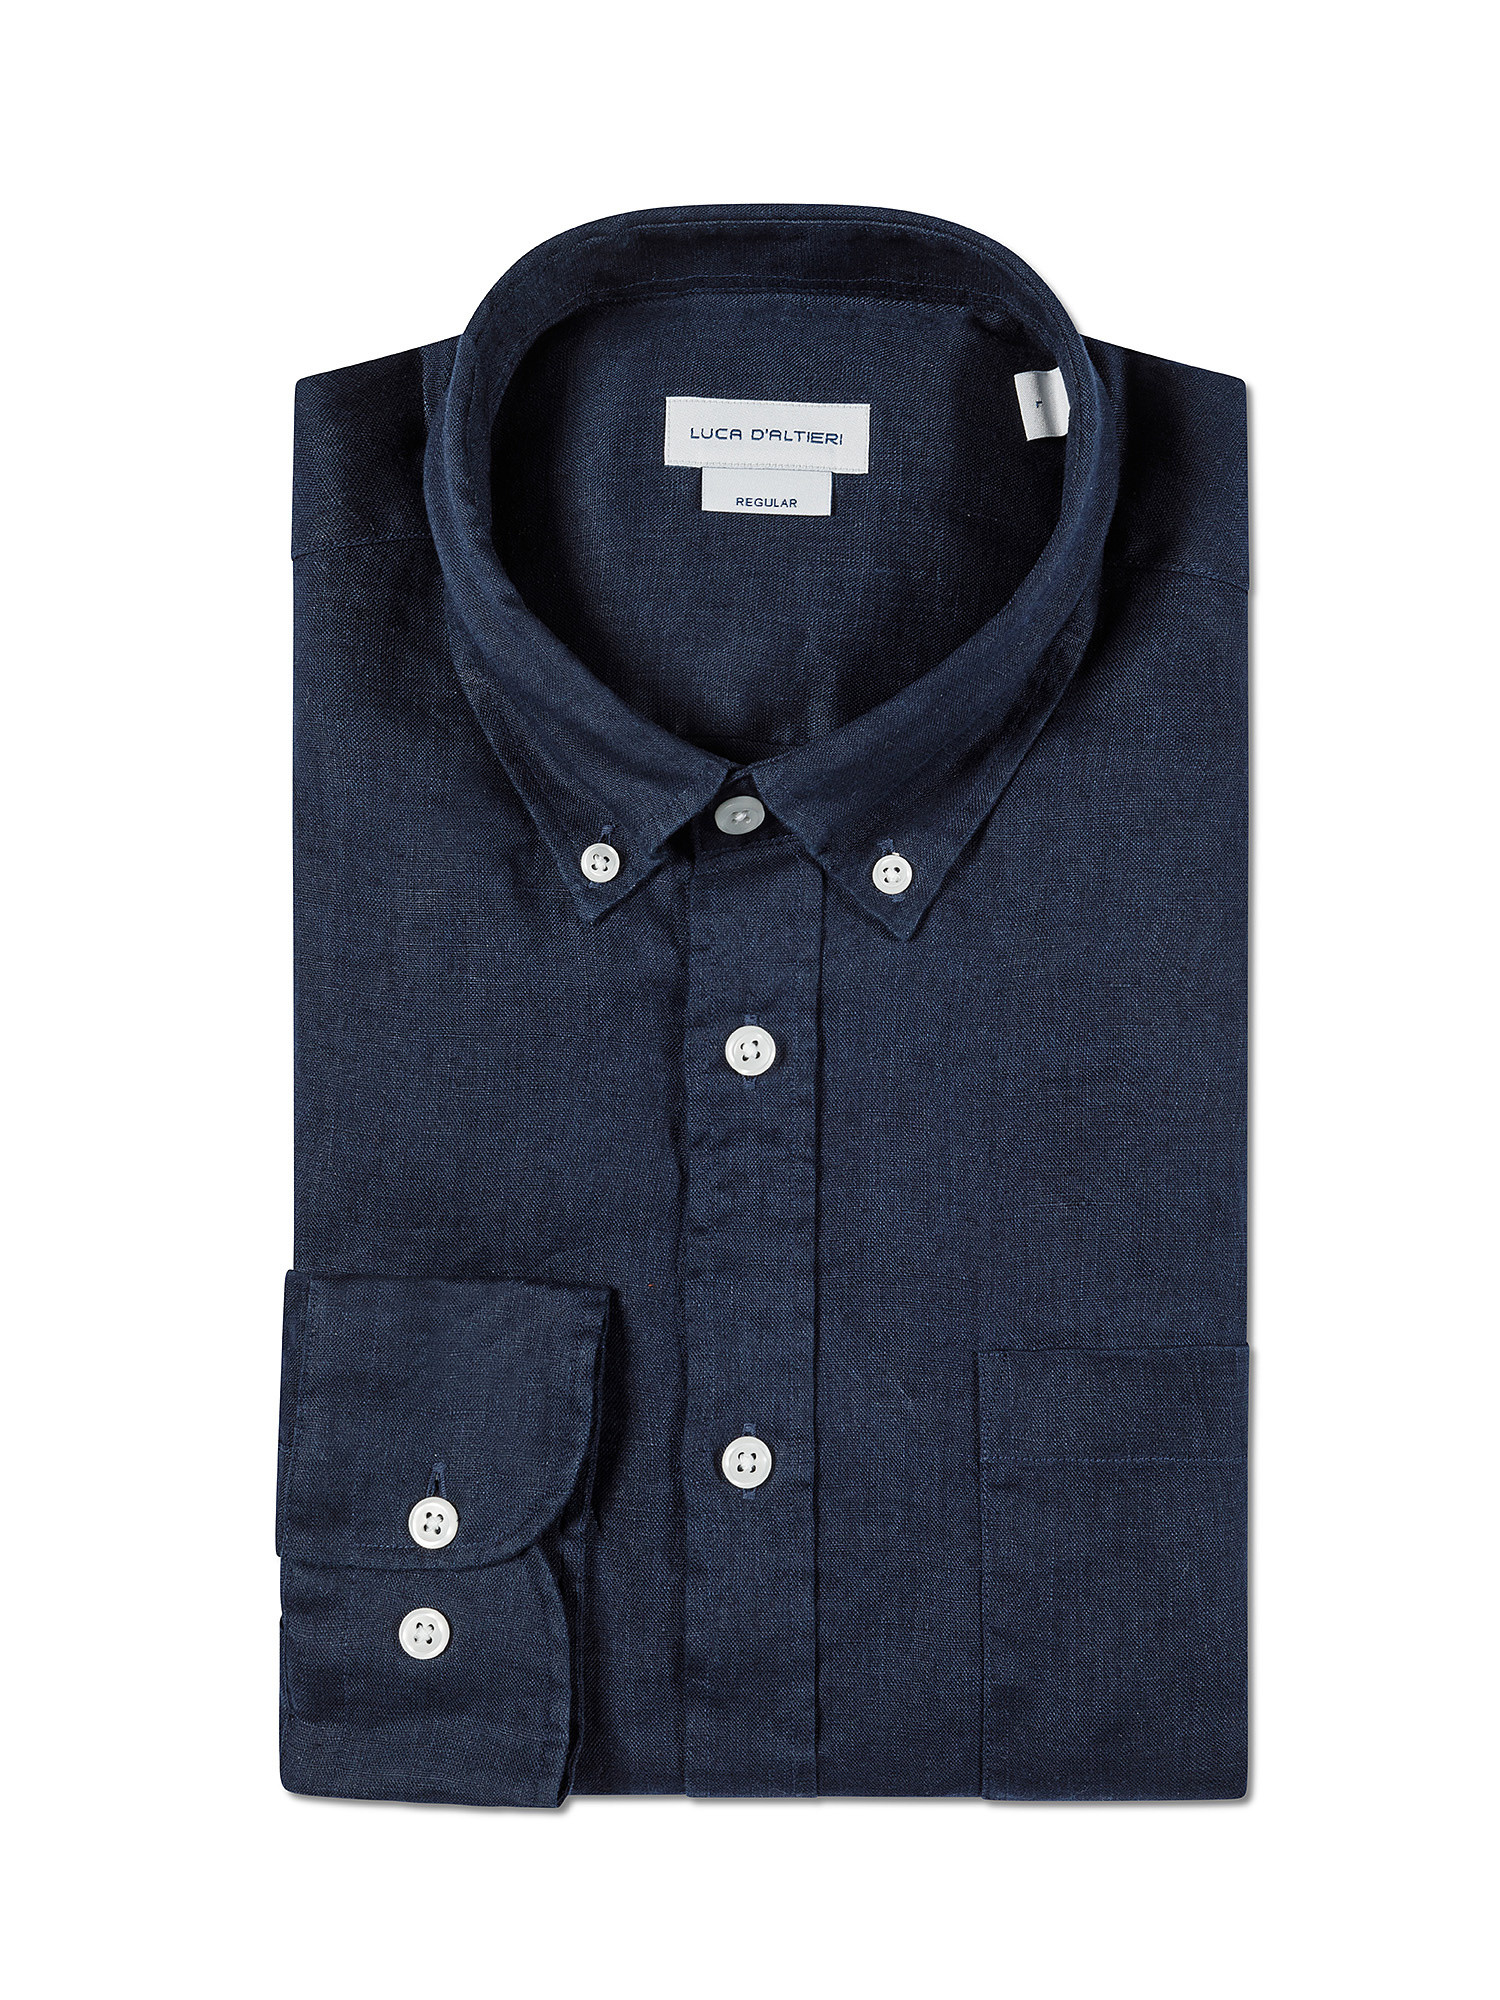 Luca D'Altieri - Regular fit shirt in pure linen, Blue, large image number 2